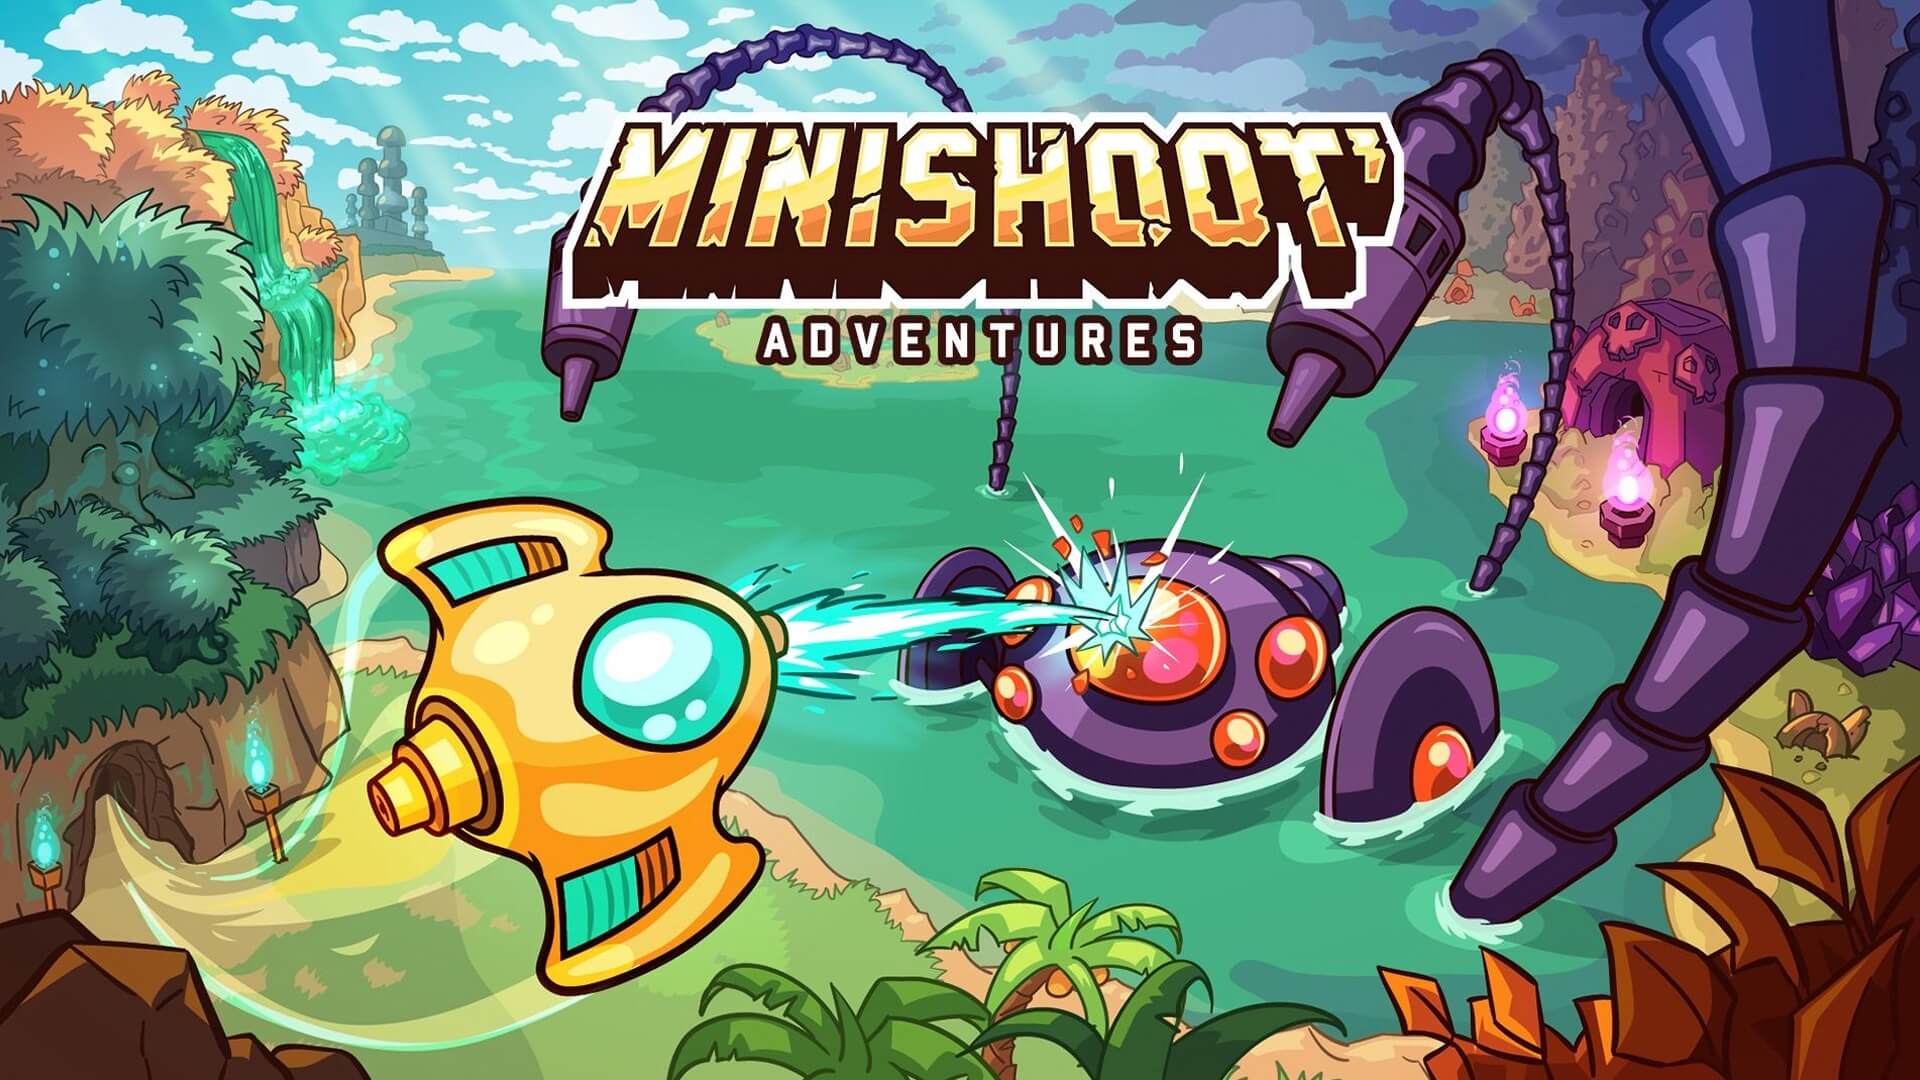 Minishoot’ Adventures Image